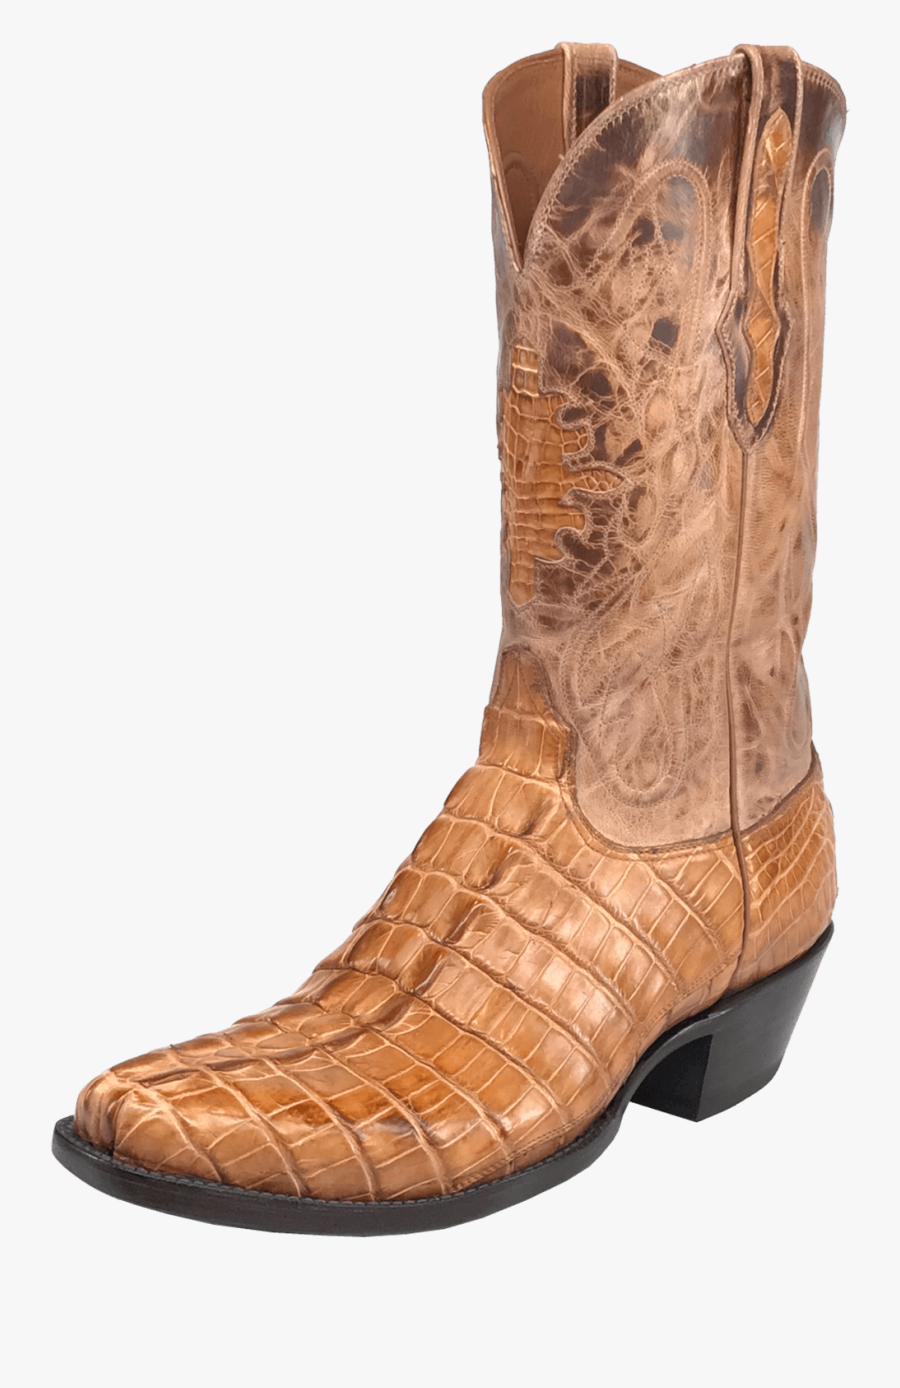 Cowboy Boots Png - Alligator Tail Cowboy Boots, Transparent Clipart